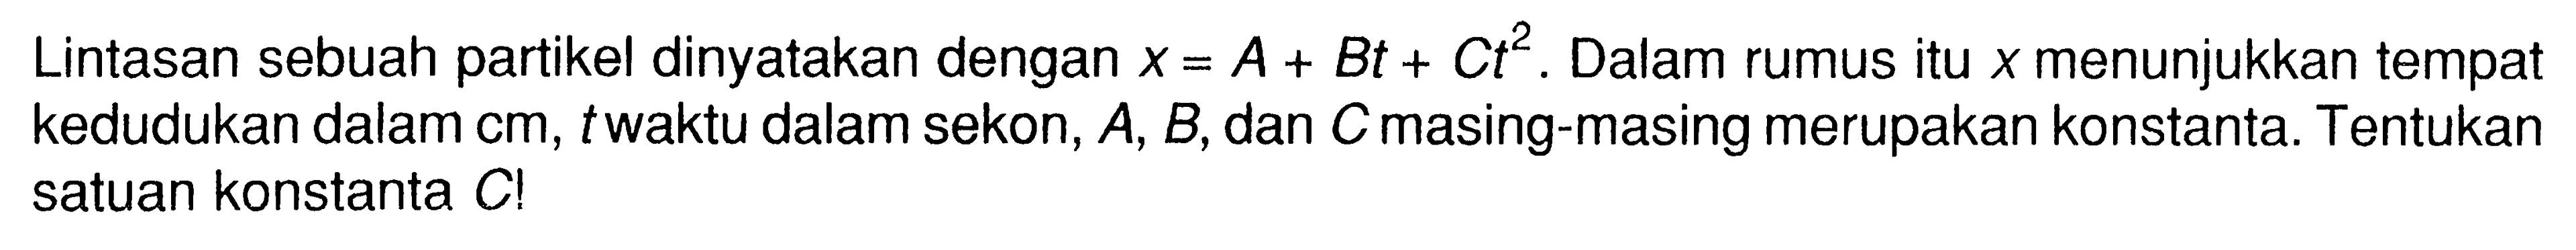 Lintasan sebuah partikel dinyatakan dengan x = A + Bt + C t^2 . Dalam rumus itu x menunjukkan tempat kedudukan dalam cm, t waktu dalam sekon, A, B, dan C masing-masing merupakan konstanta. Tentukan satuan konstanta C!